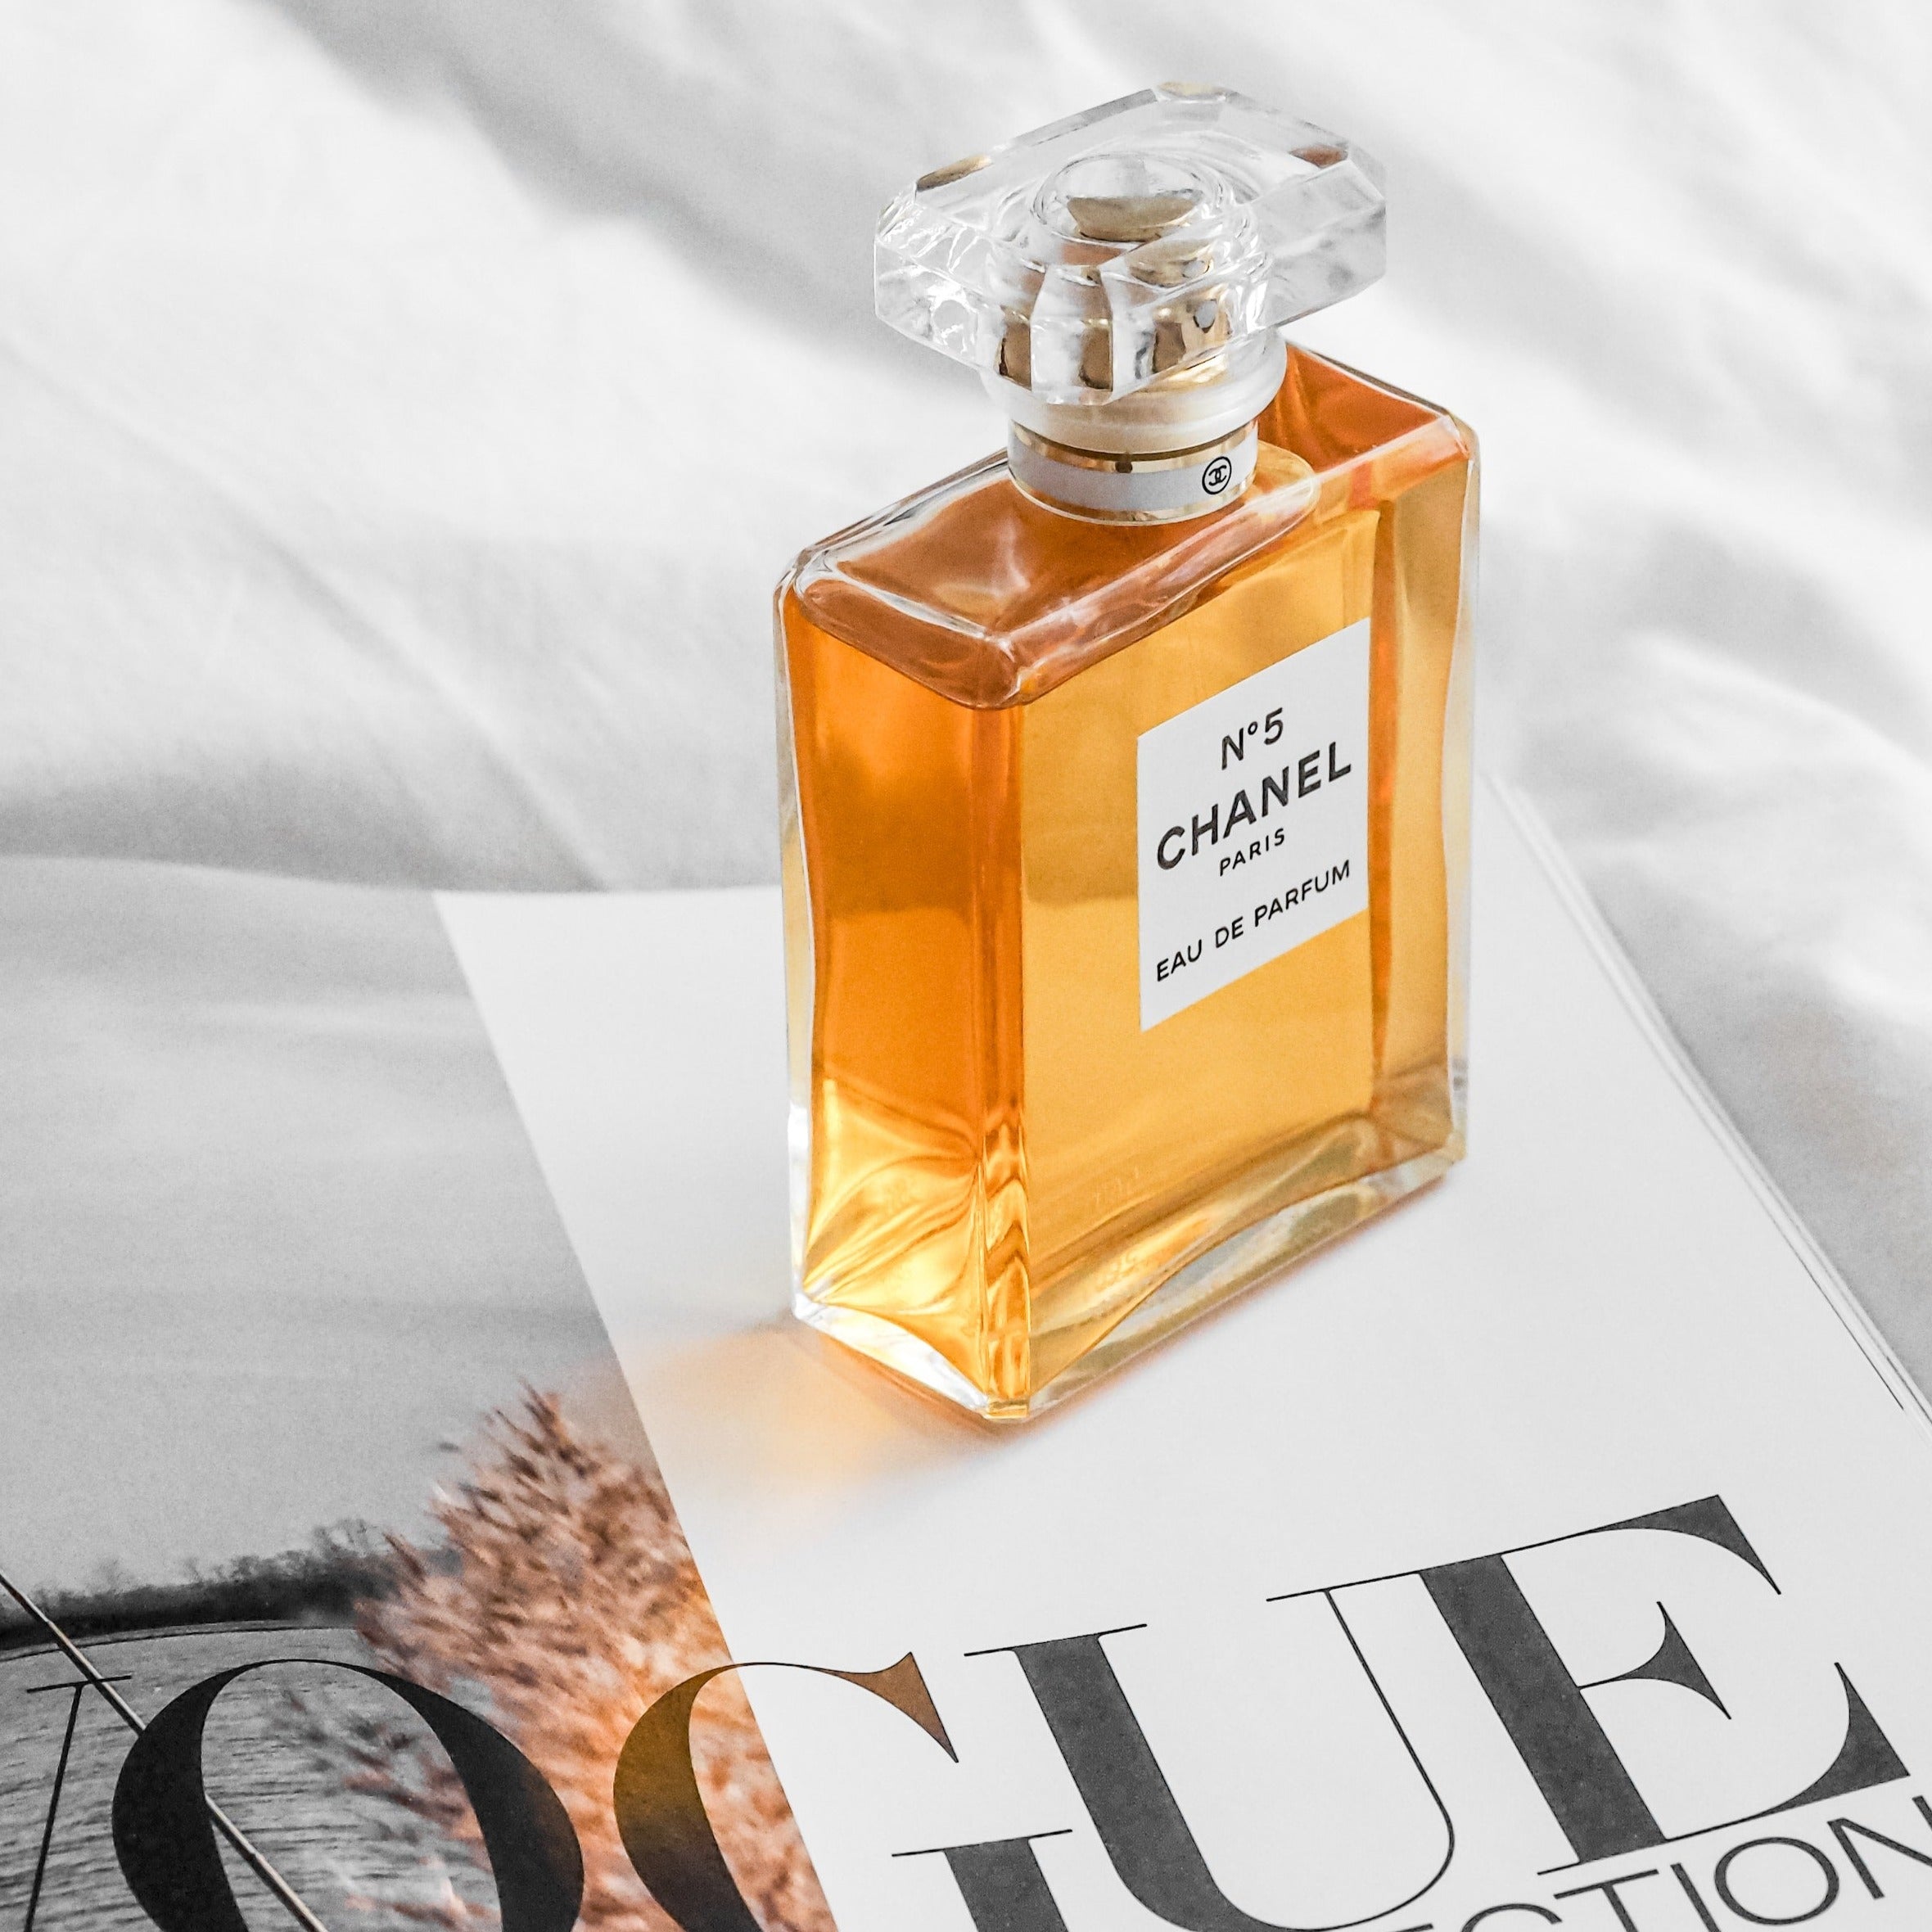 Chanel No.5 Body Lotion | My Perfume Shop Australia